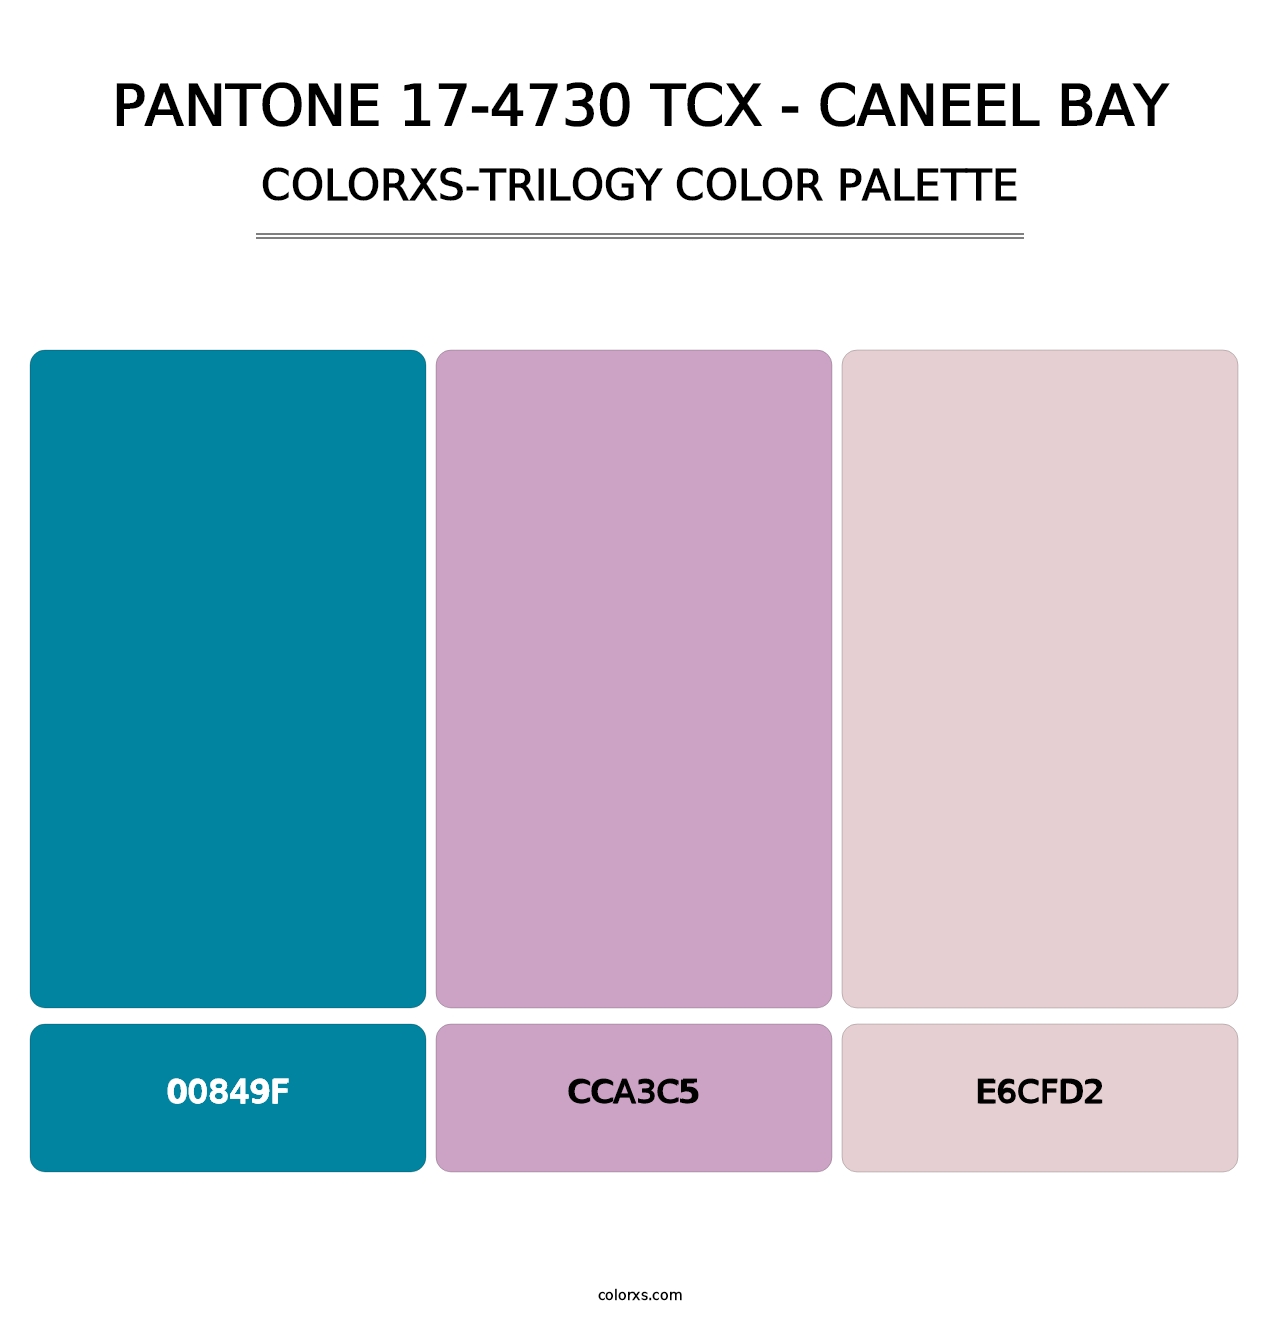 PANTONE 17-4730 TCX - Caneel Bay - Colorxs Trilogy Palette